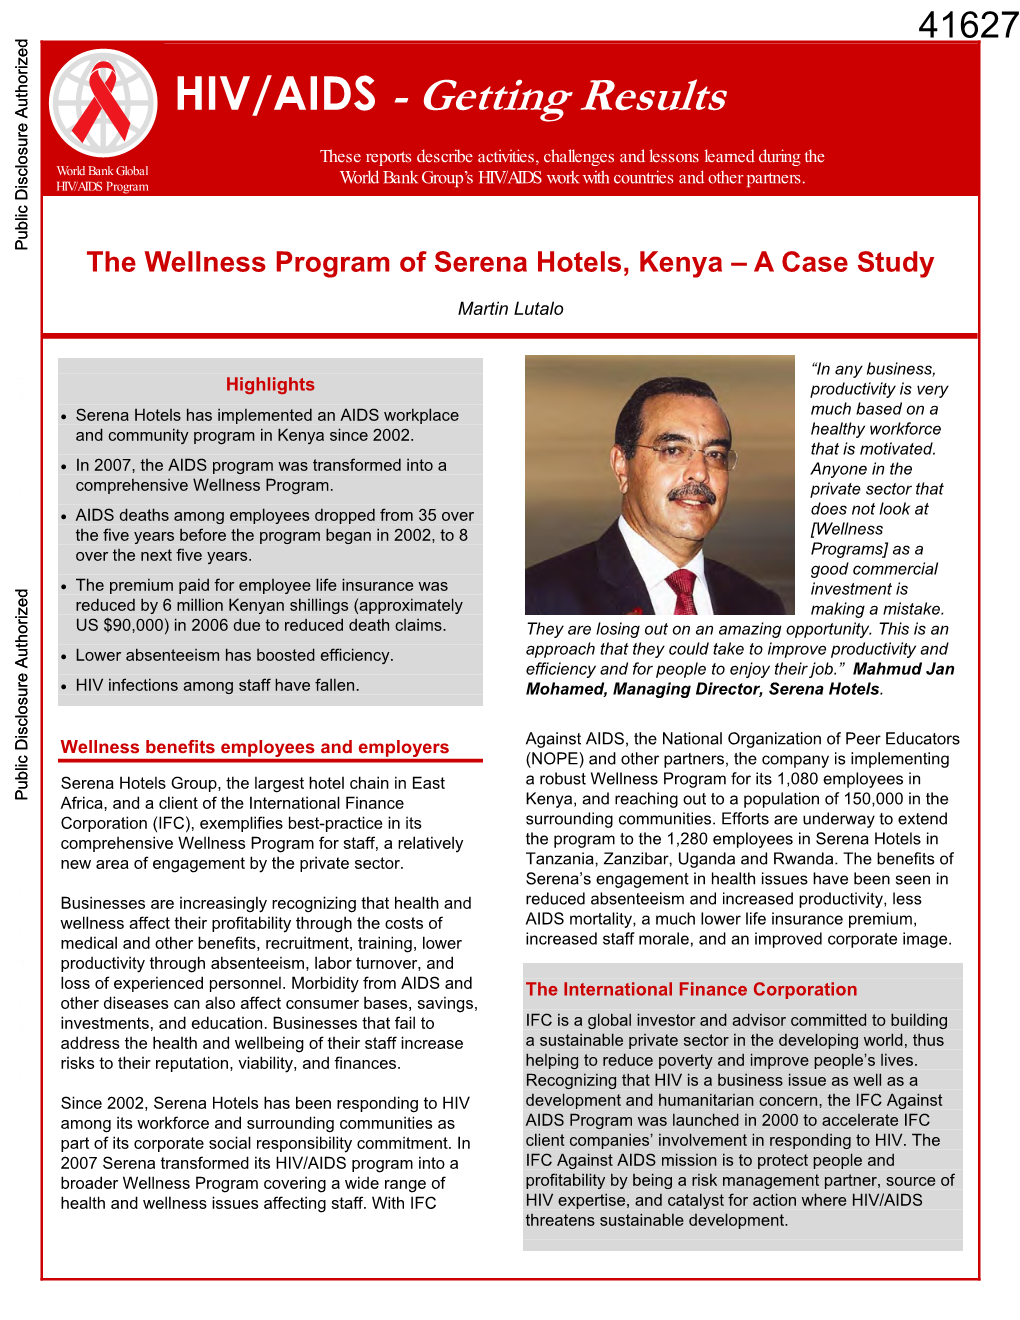 The Wellness Program of Serena Hotels, Kenya – a Case Study